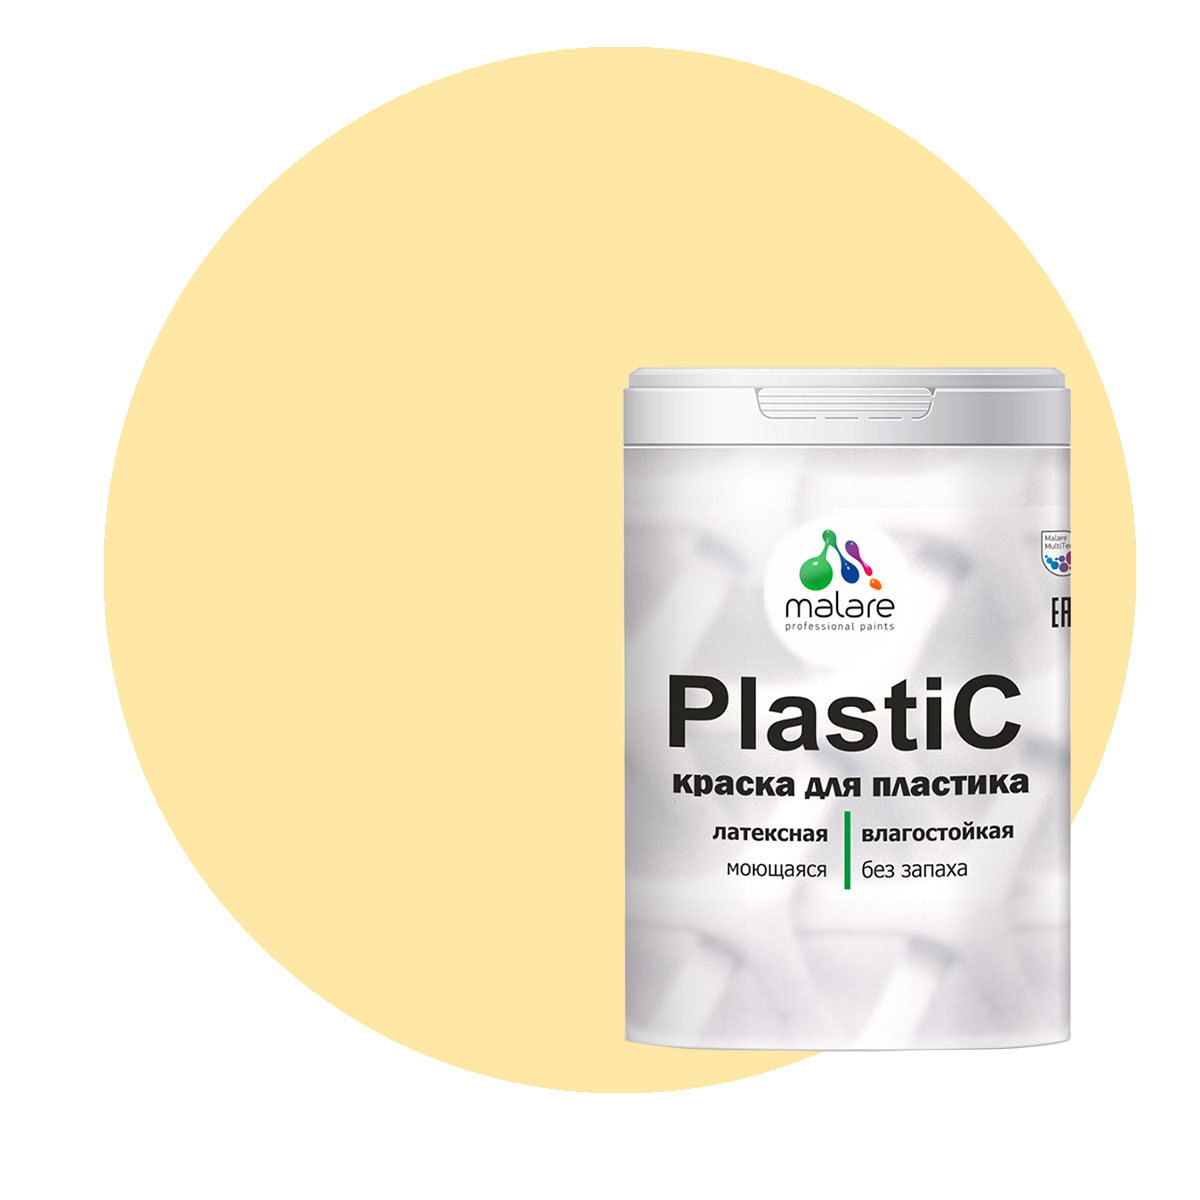 Краска Malare PlastiC для пластика, ПВХ, для сайдинга, тропический макарун, 2 кг. блеск макарун в коробочке